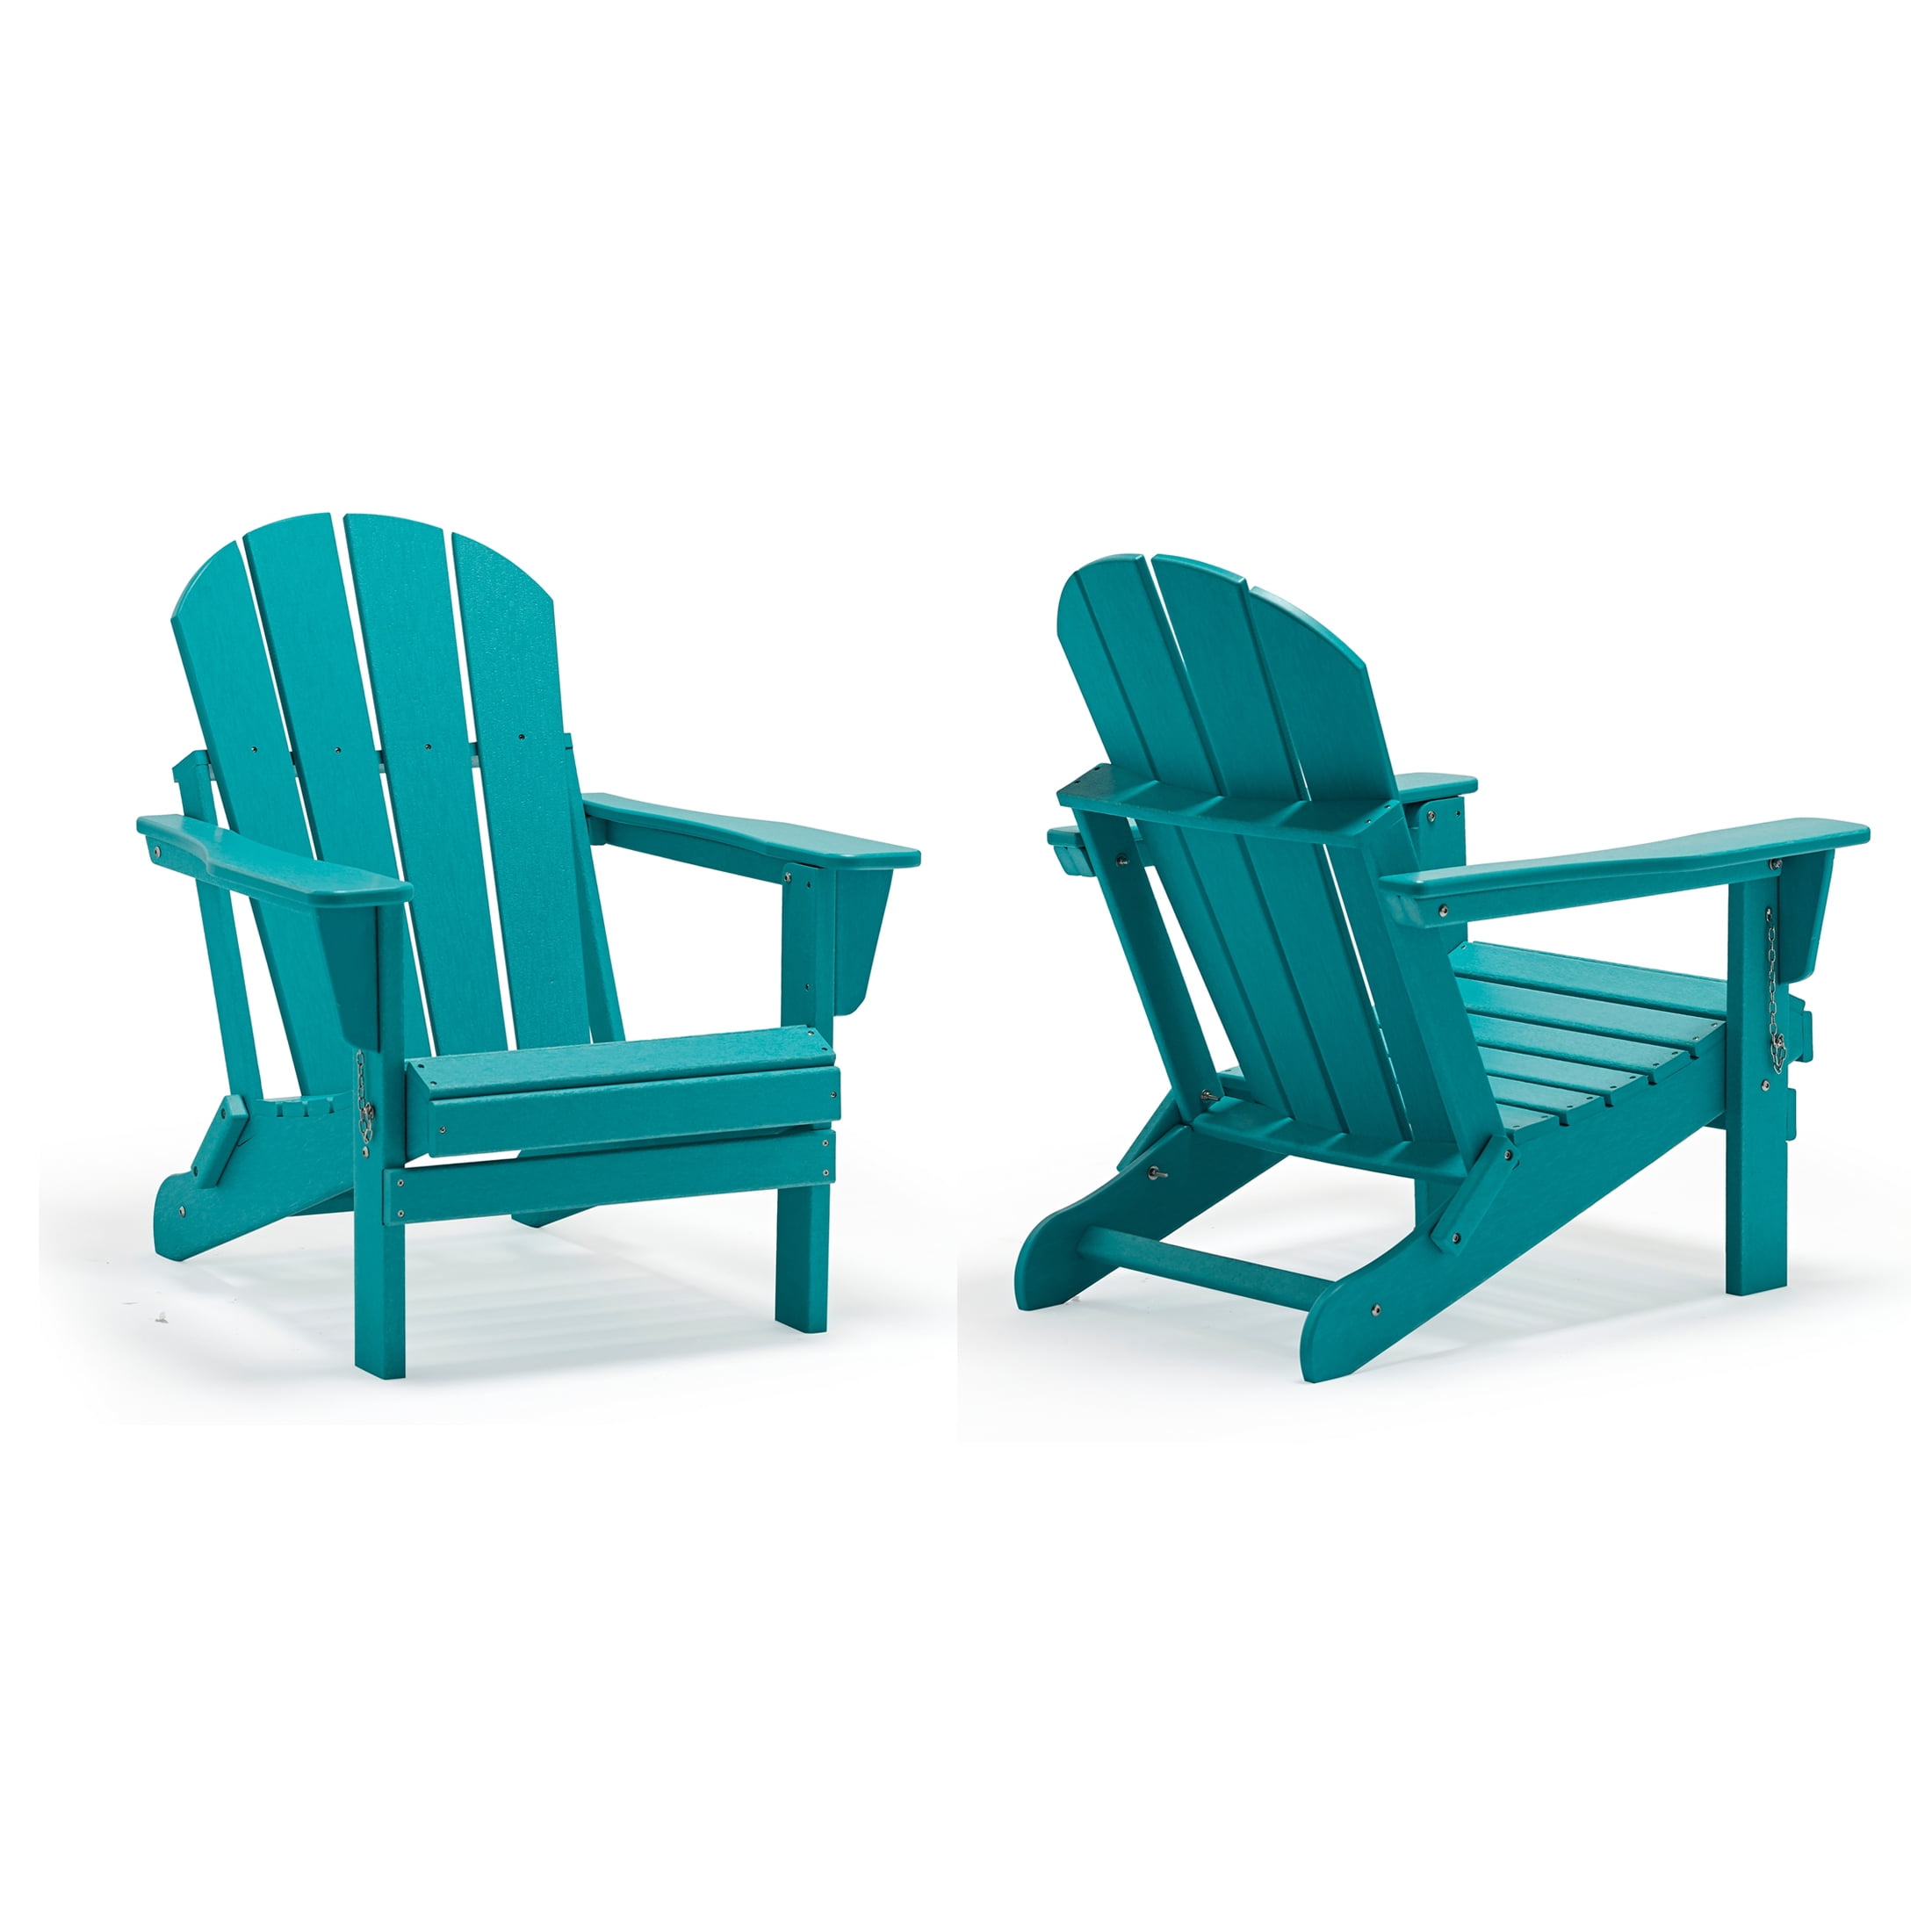 Braxton Outdoor Folding Plastic Adirondack Chair Set Of 2 Turquoise Walmart Com Walmart Com